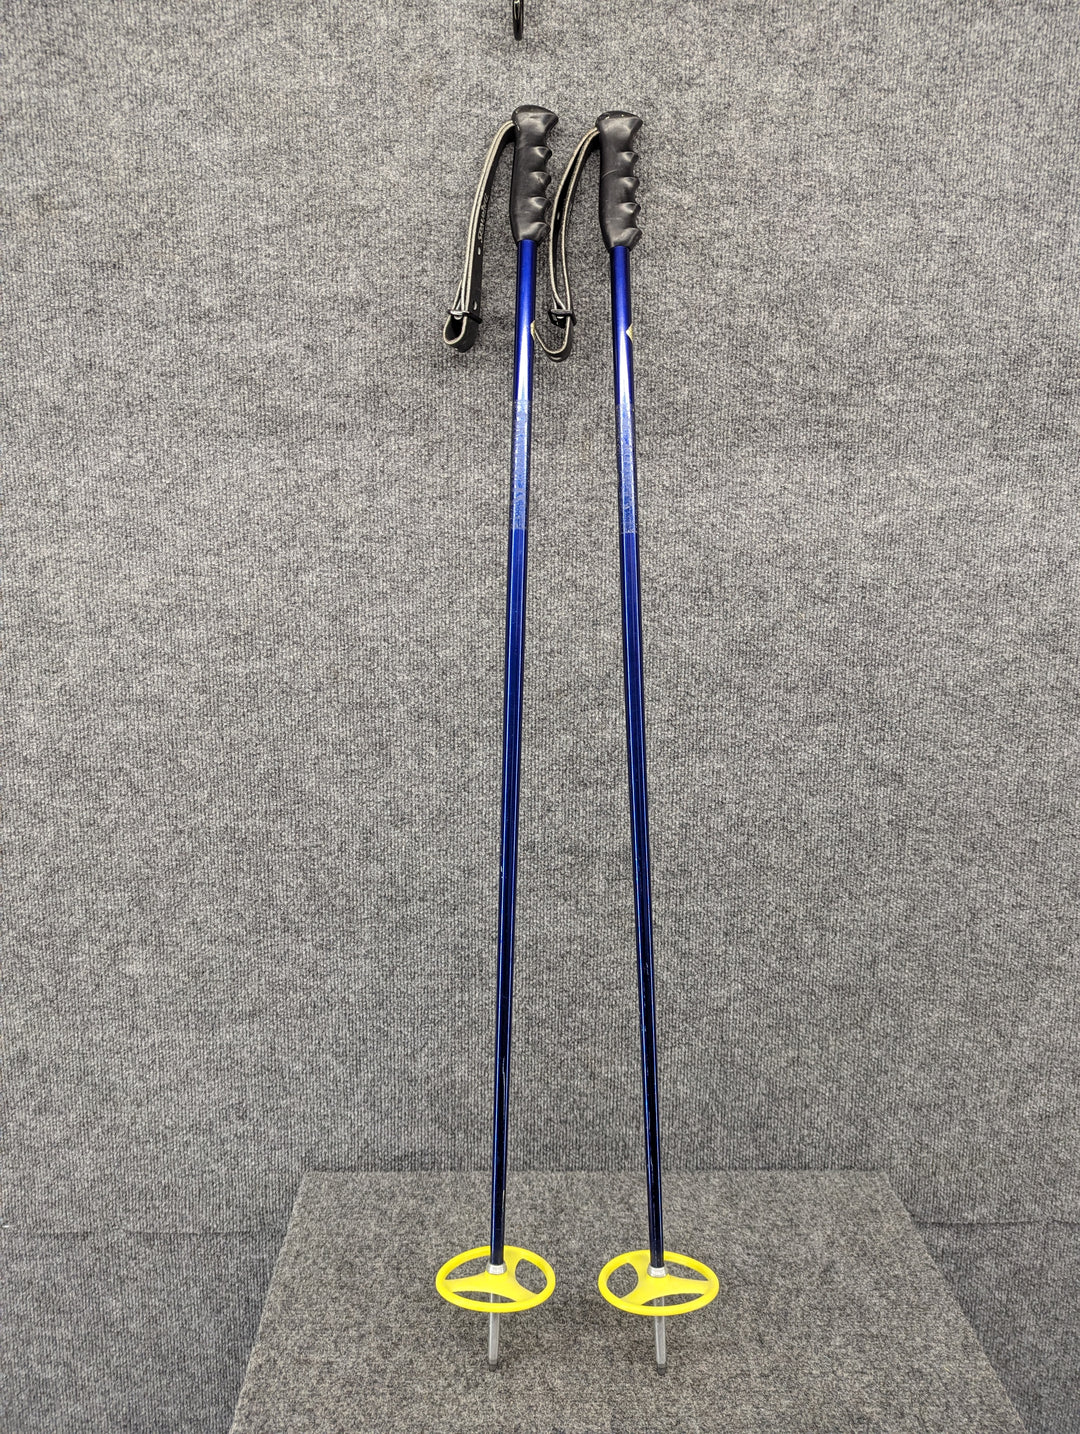 Misc. Length 110 cm/43.5" Cross Country Ski Poles